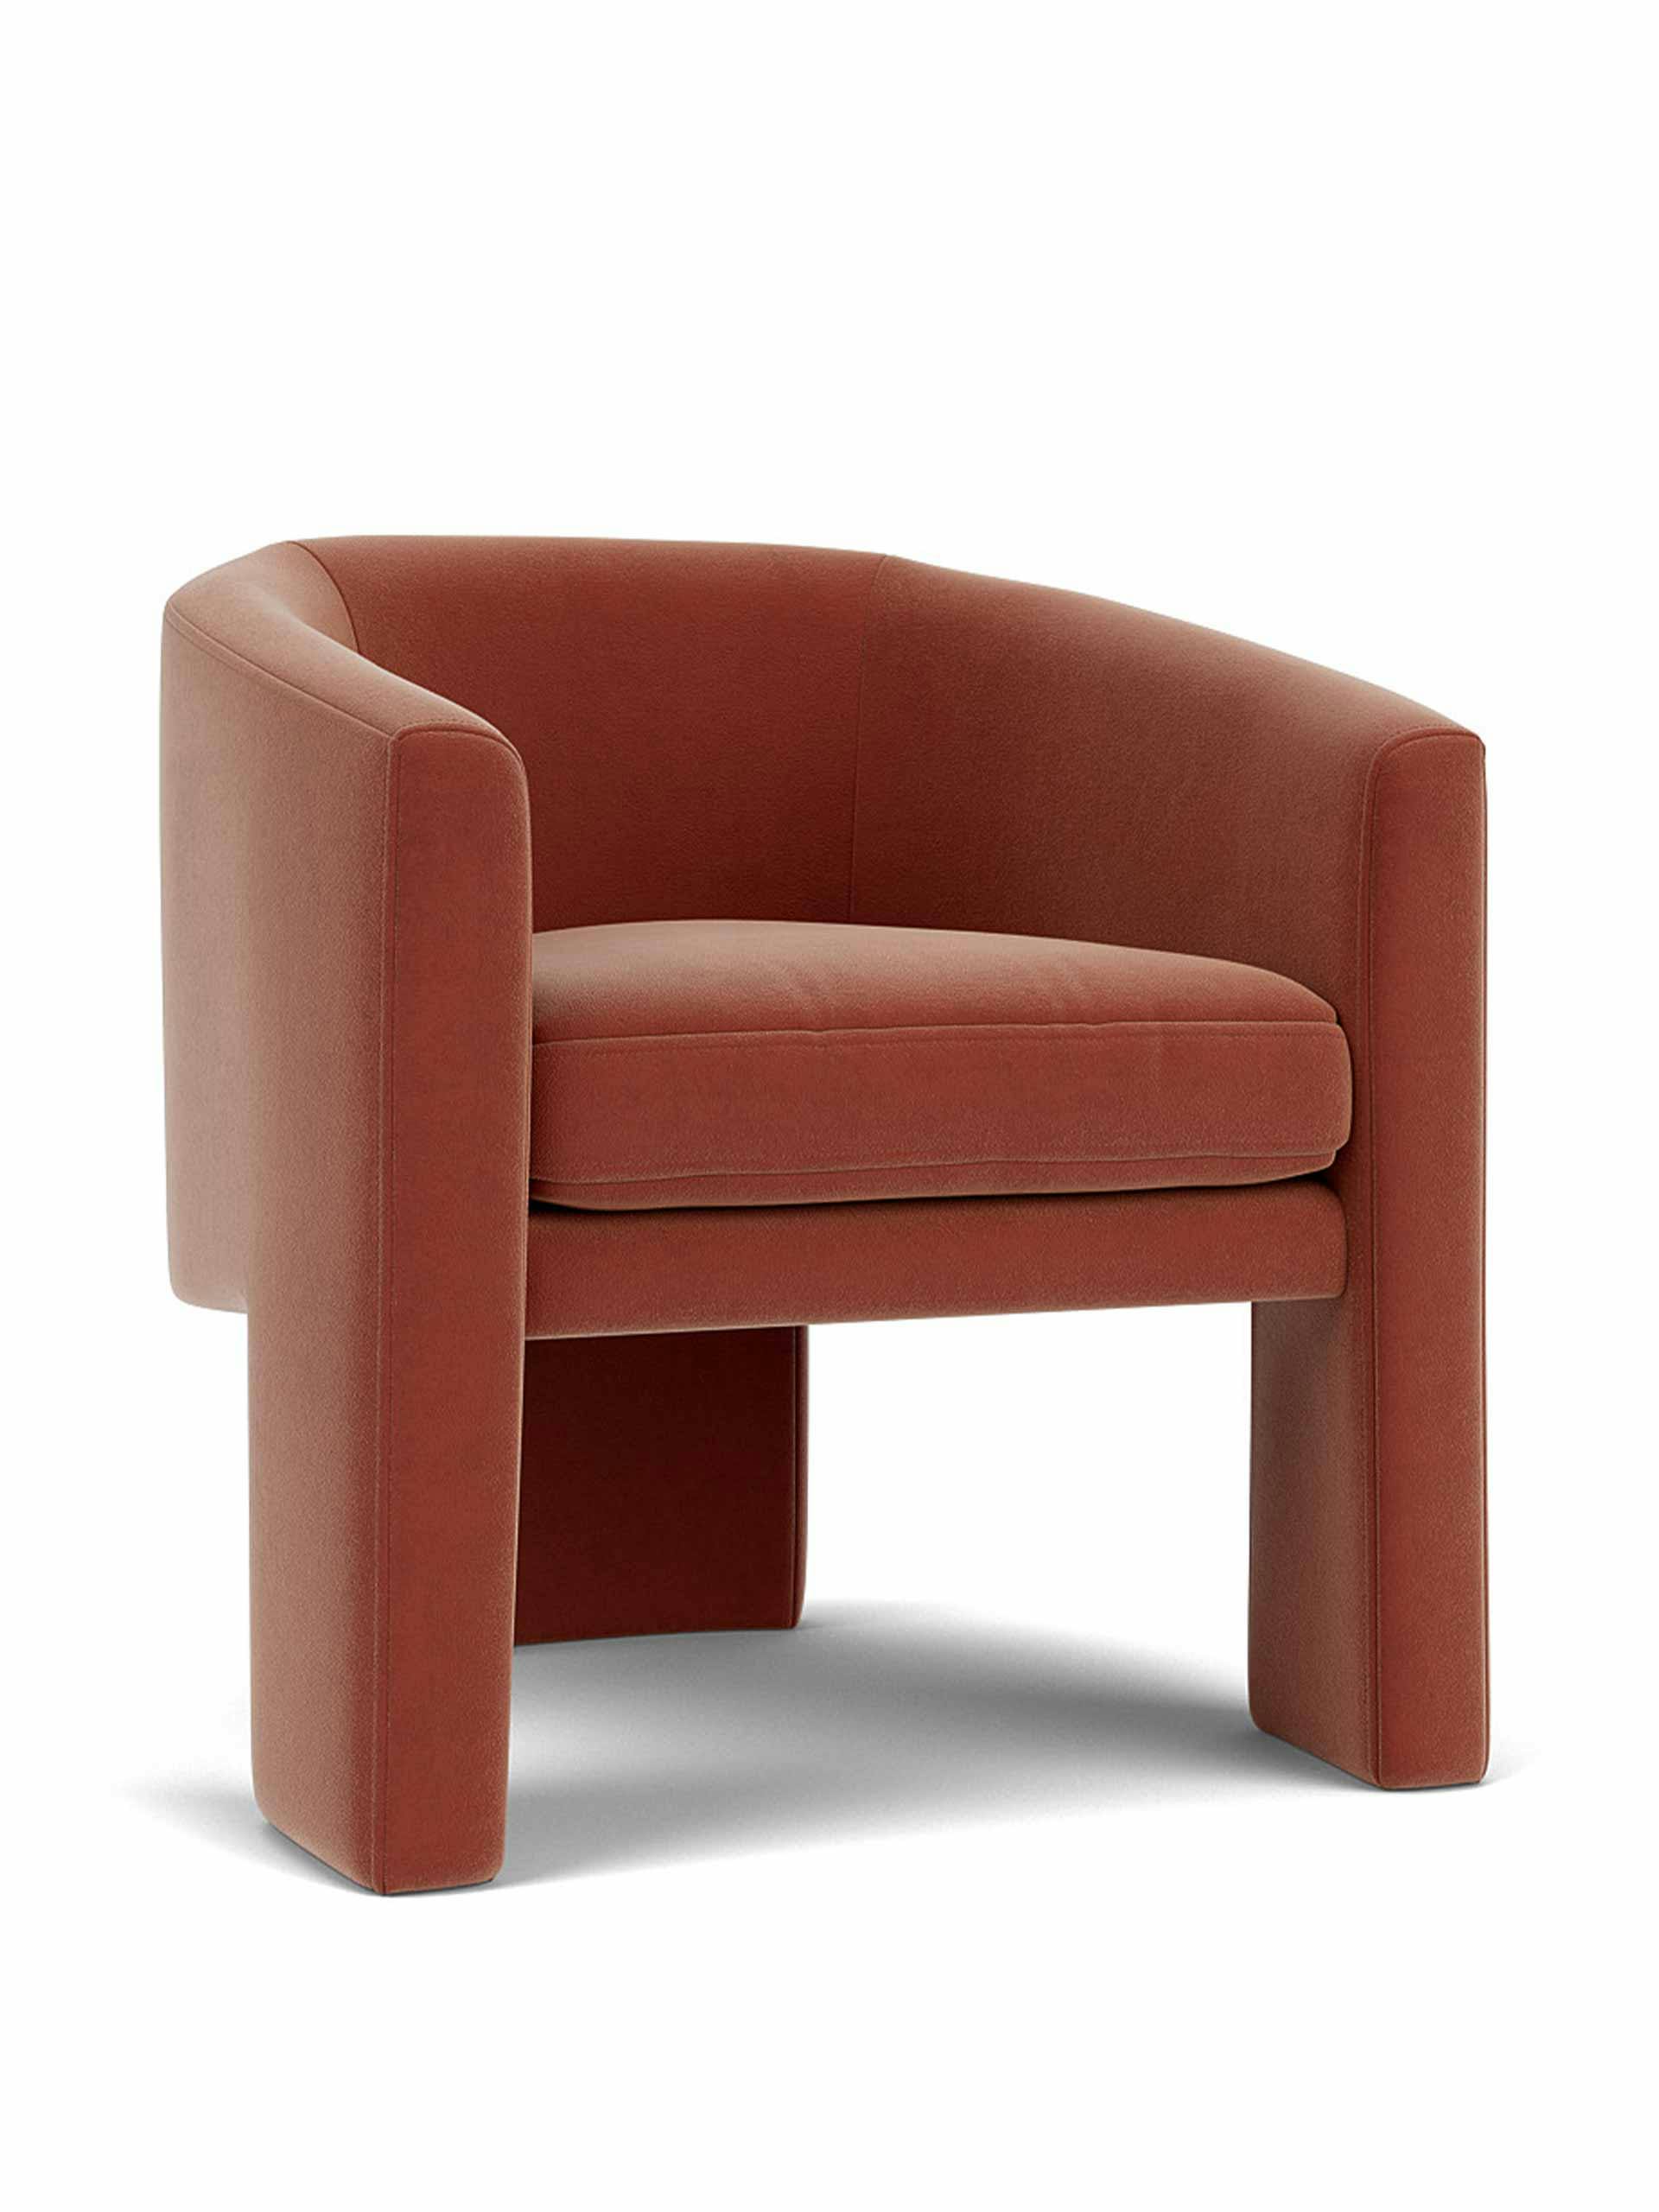 Wandsworth chair in Brick plush velvet